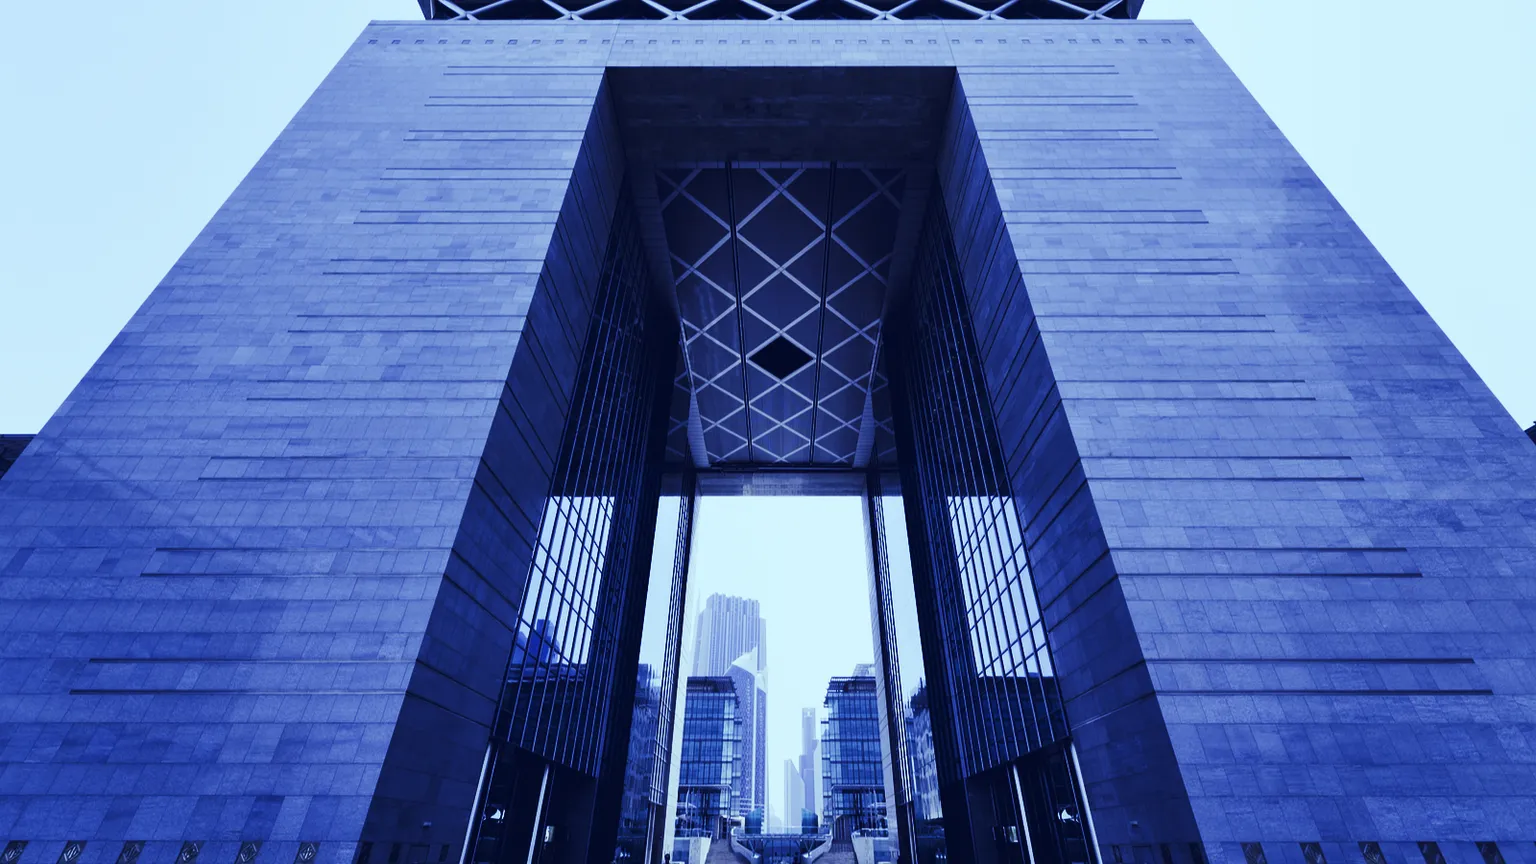 The Gate of Dubai International Financial Centre. Image: Shutterstock